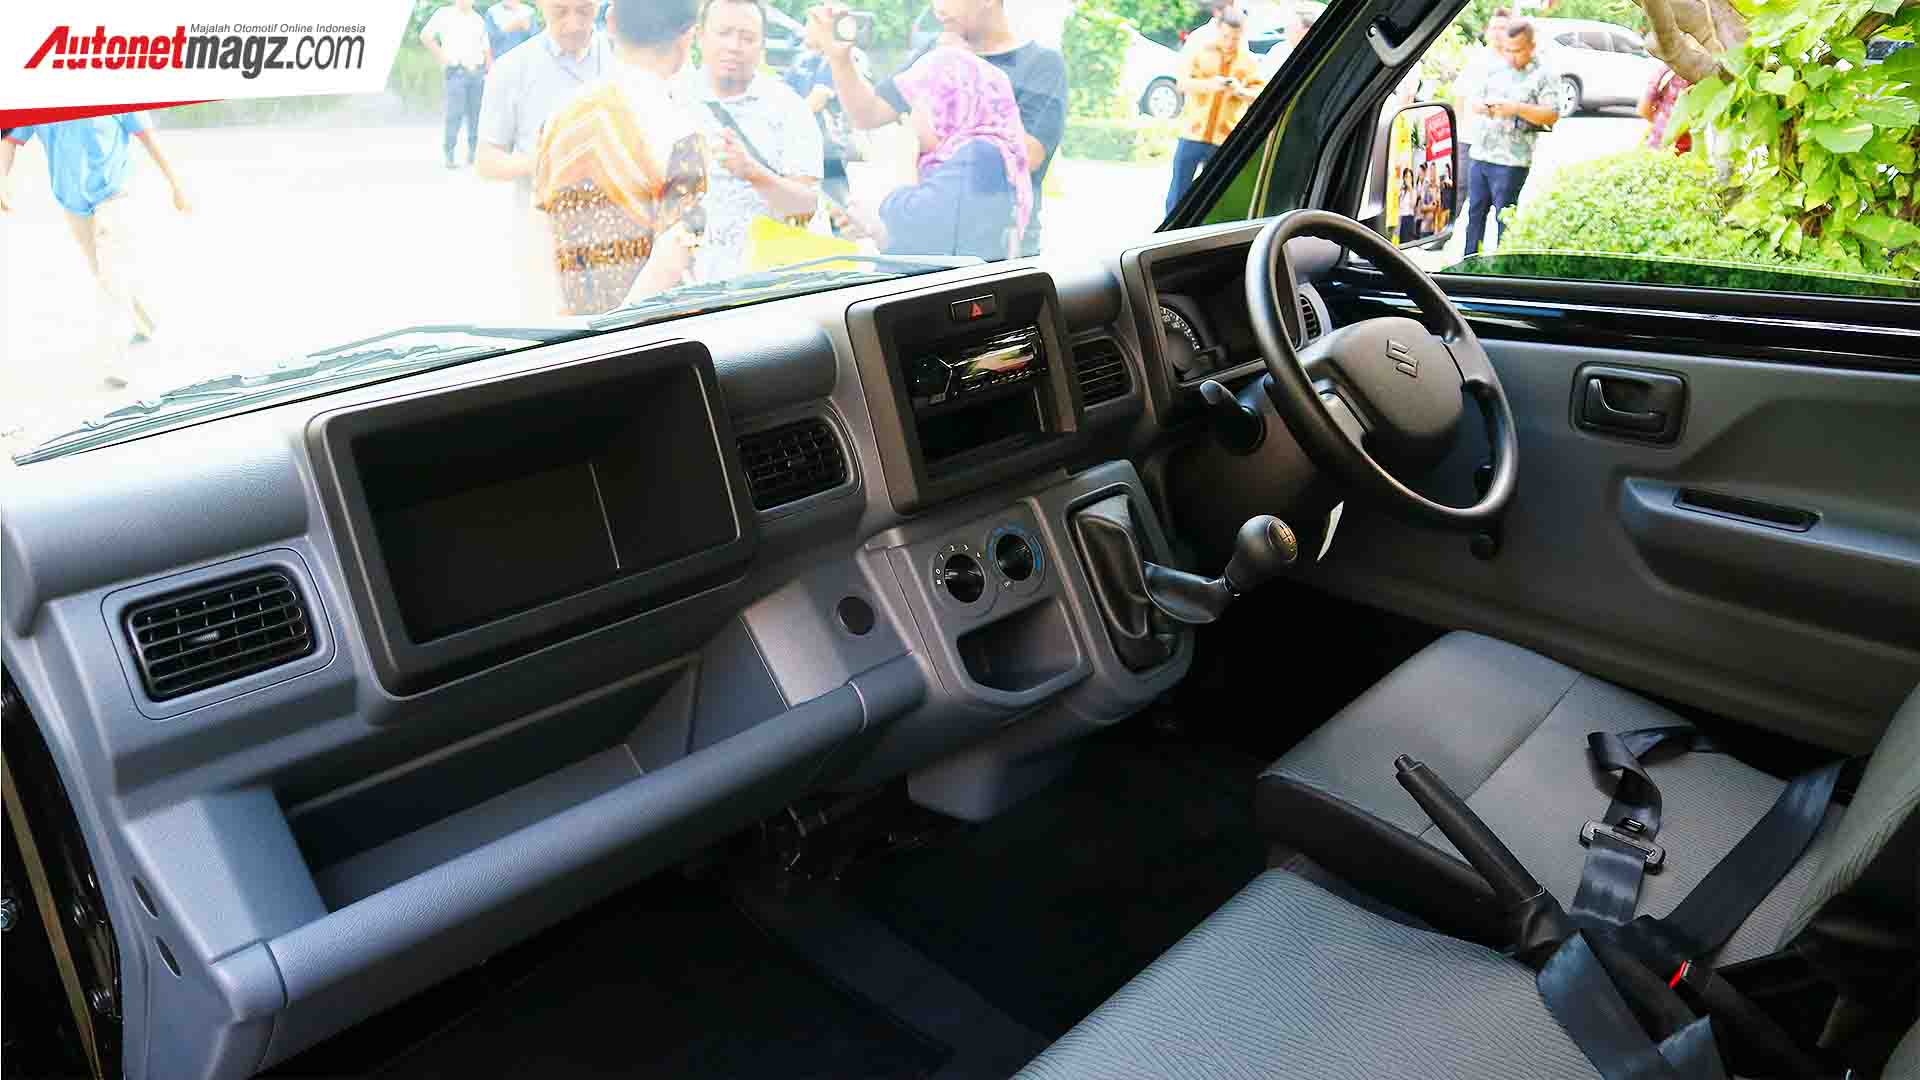 Berita, Interior All New Suzuki Carry Pickup: Gerak Cepat, All New Suzuki Carry Juga Dirilis di Surabaya!